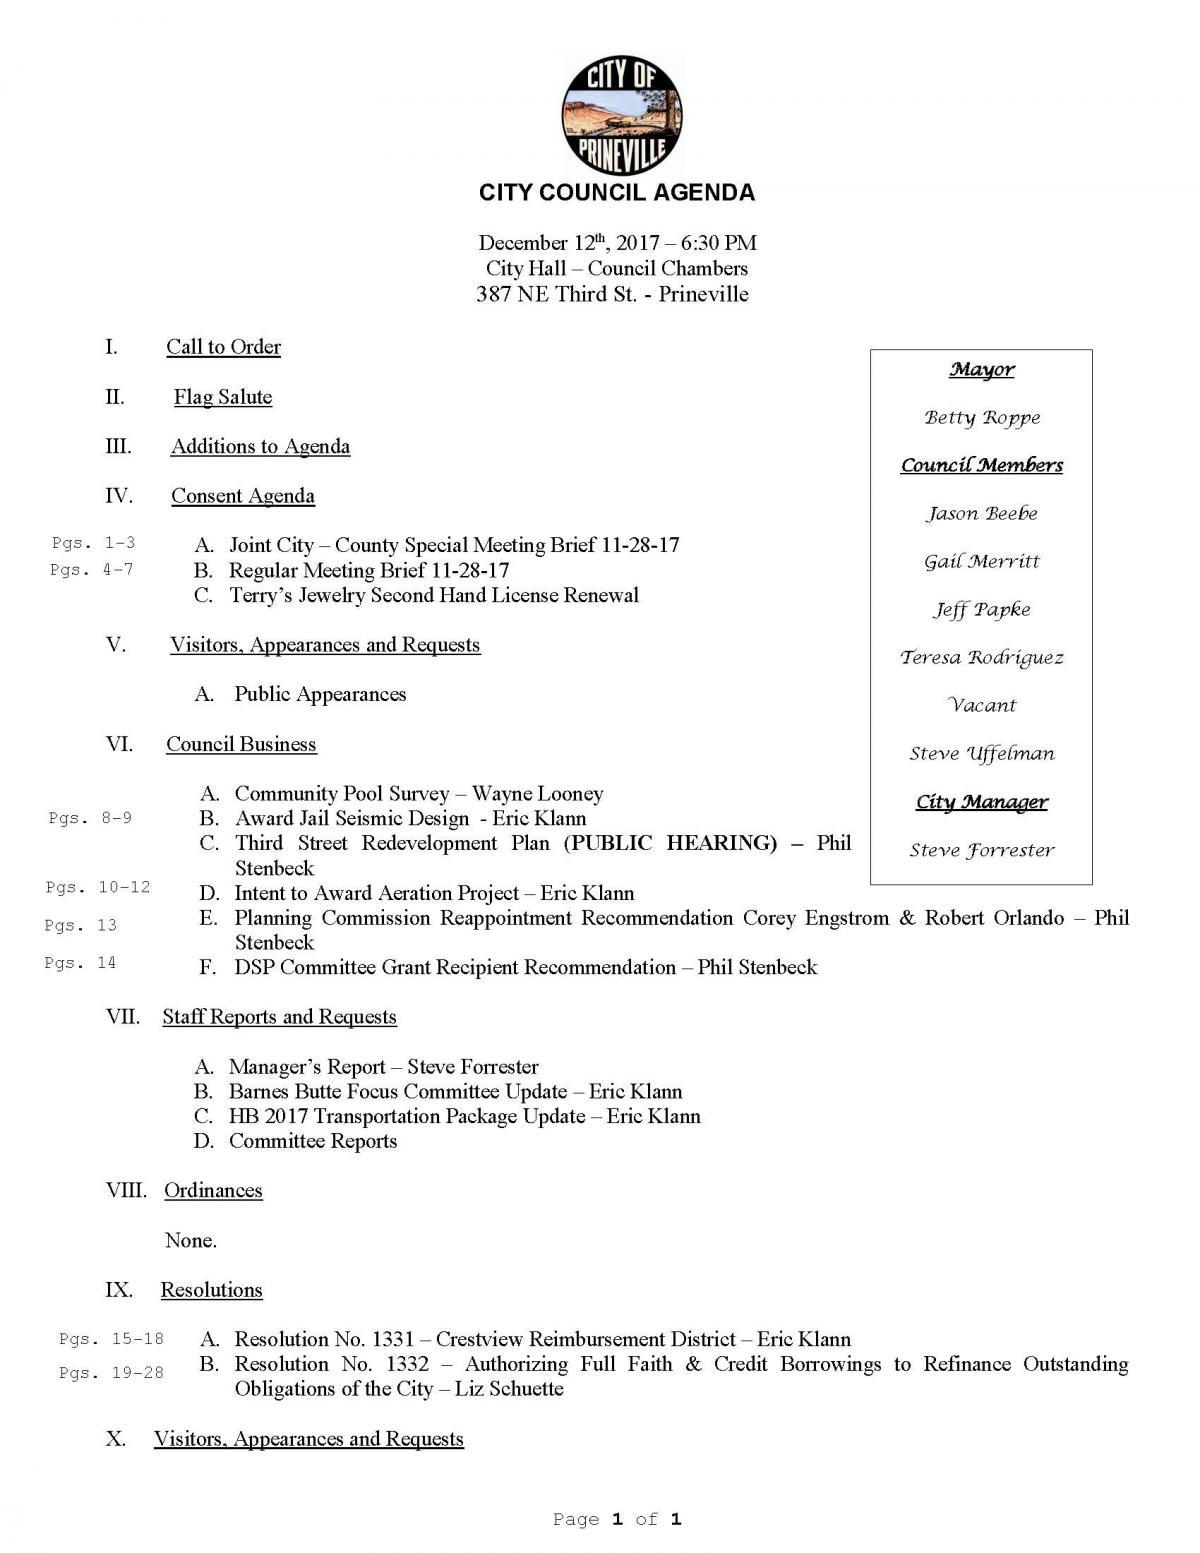 Council Agenda 12-12-17